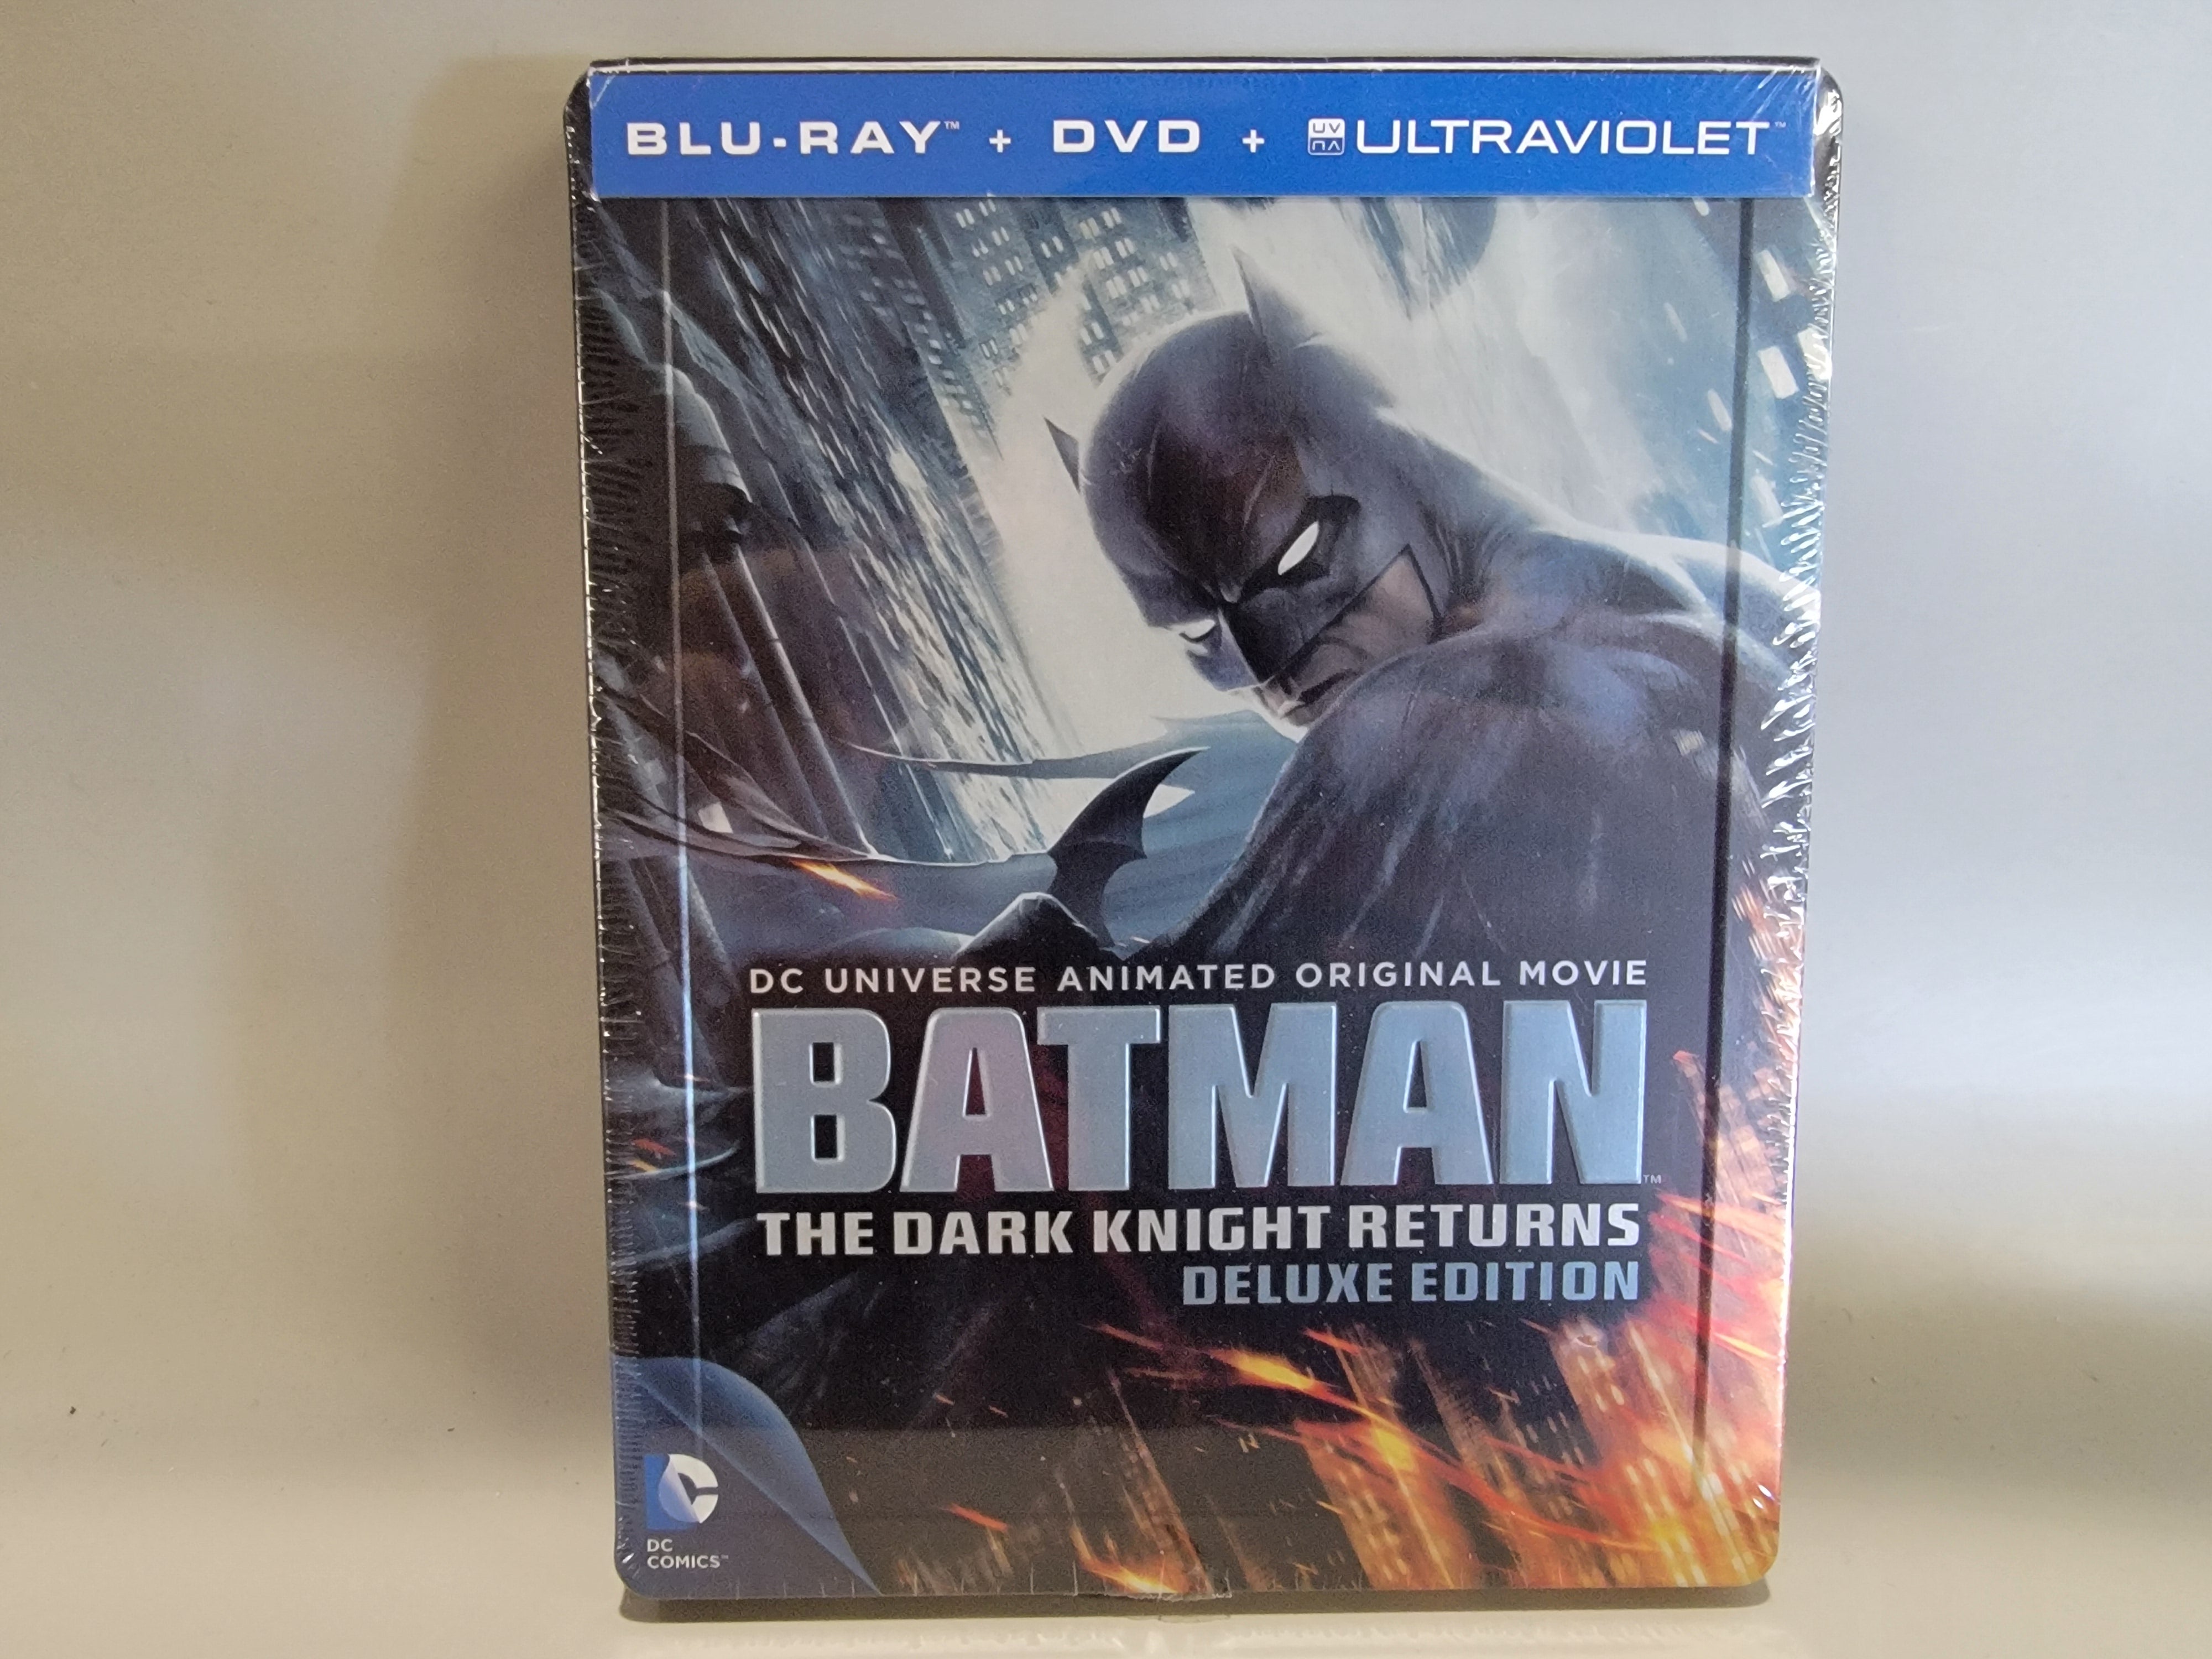 BATMAN: THE DARK KNIGHT RETURNS (LIMITED EDITION) BLU-RAY/DVD STEELBOOK [USED]